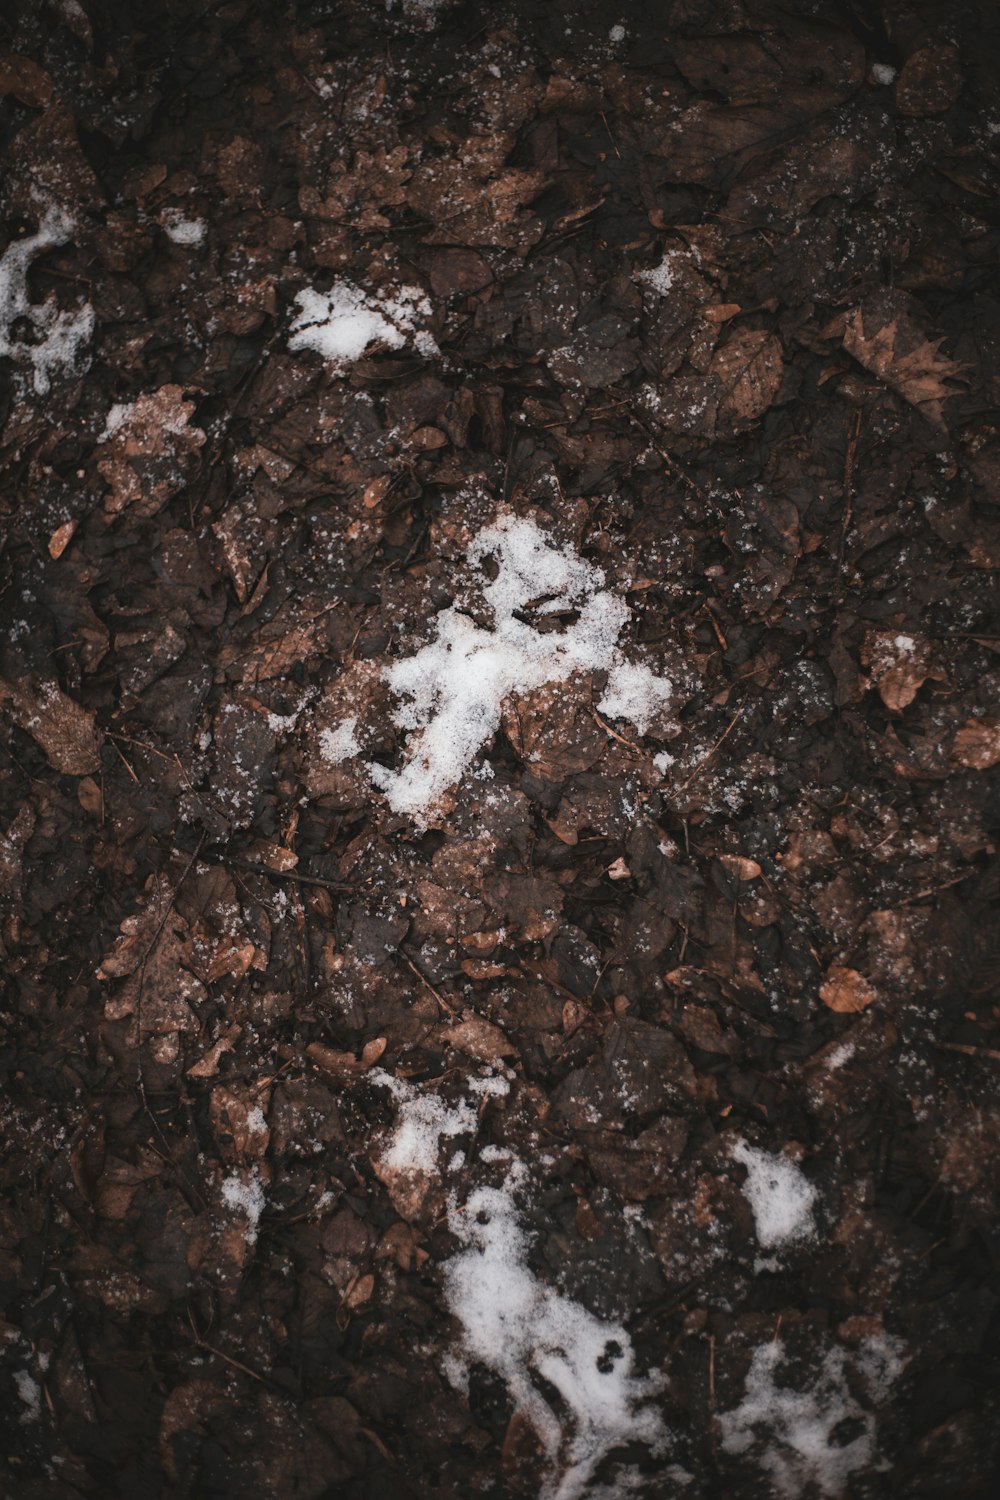 white powder on brown soil